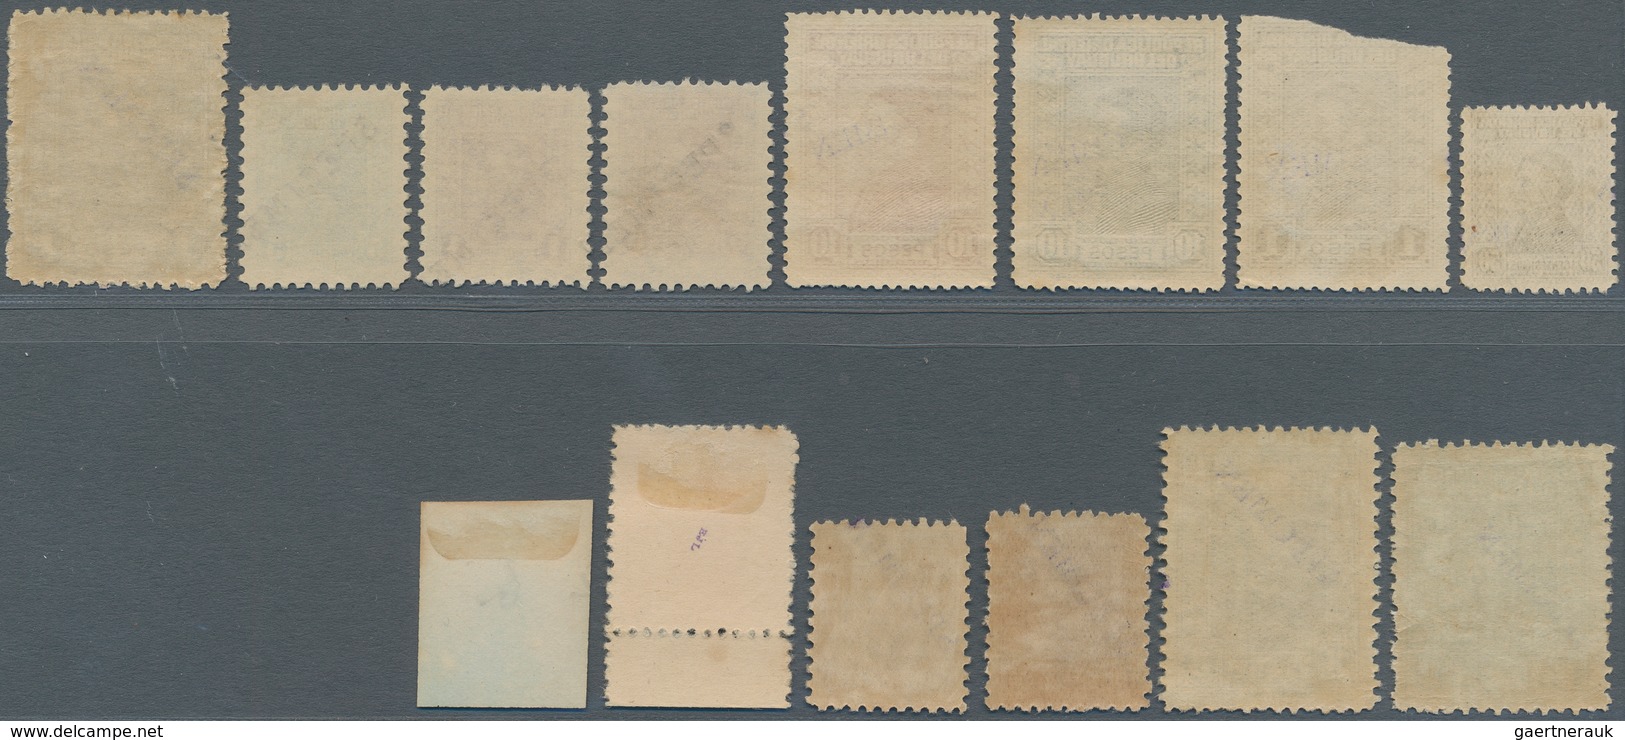 Uruguay: 1928/1936, General José Gervasio Artigas, set of 80 specimen/essays (one stamp damaged, par